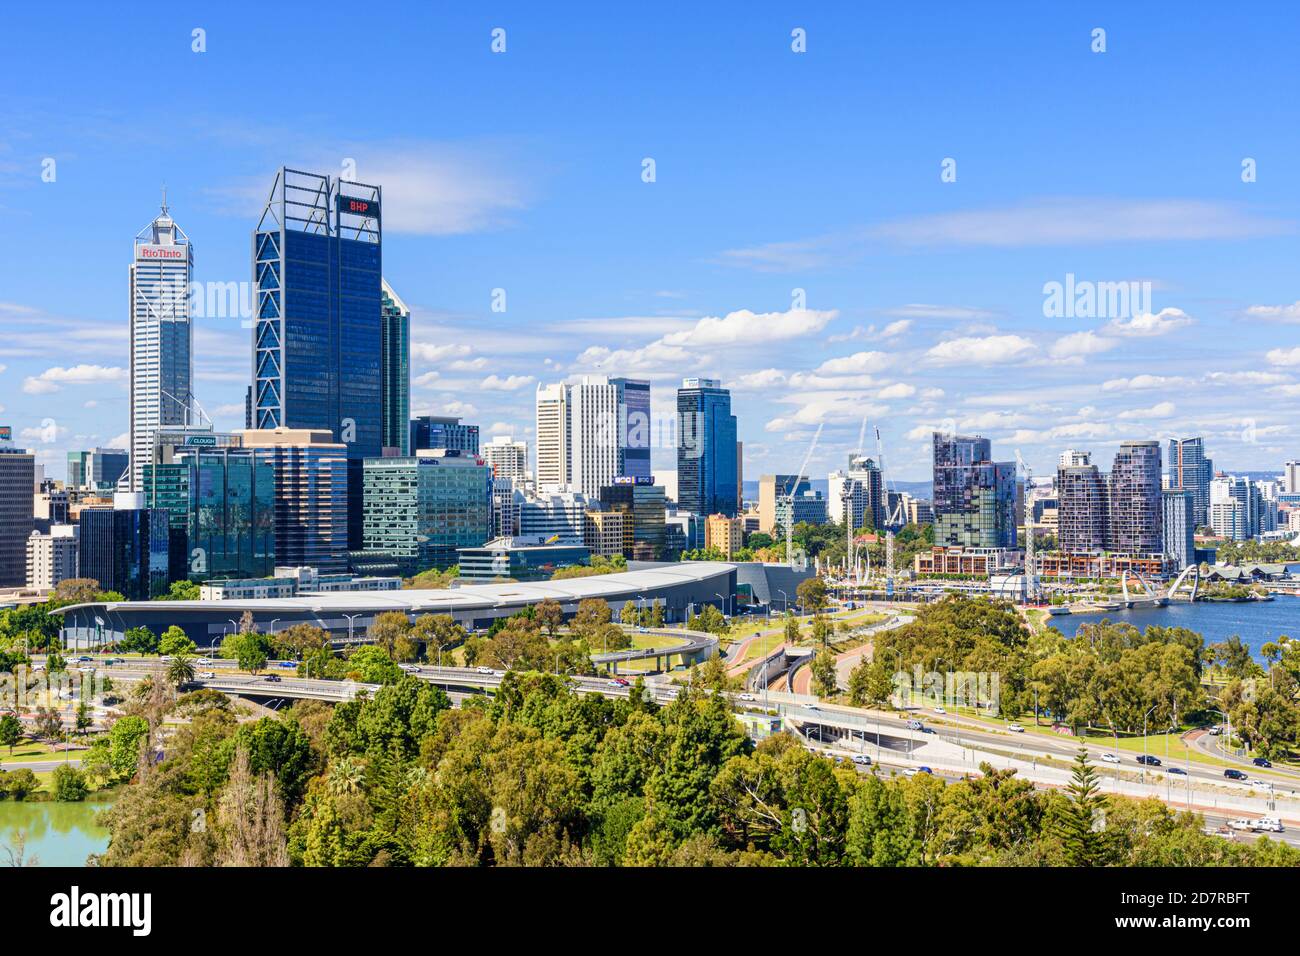 View of the City of Perth, Western Australia, Australia Stock Photo